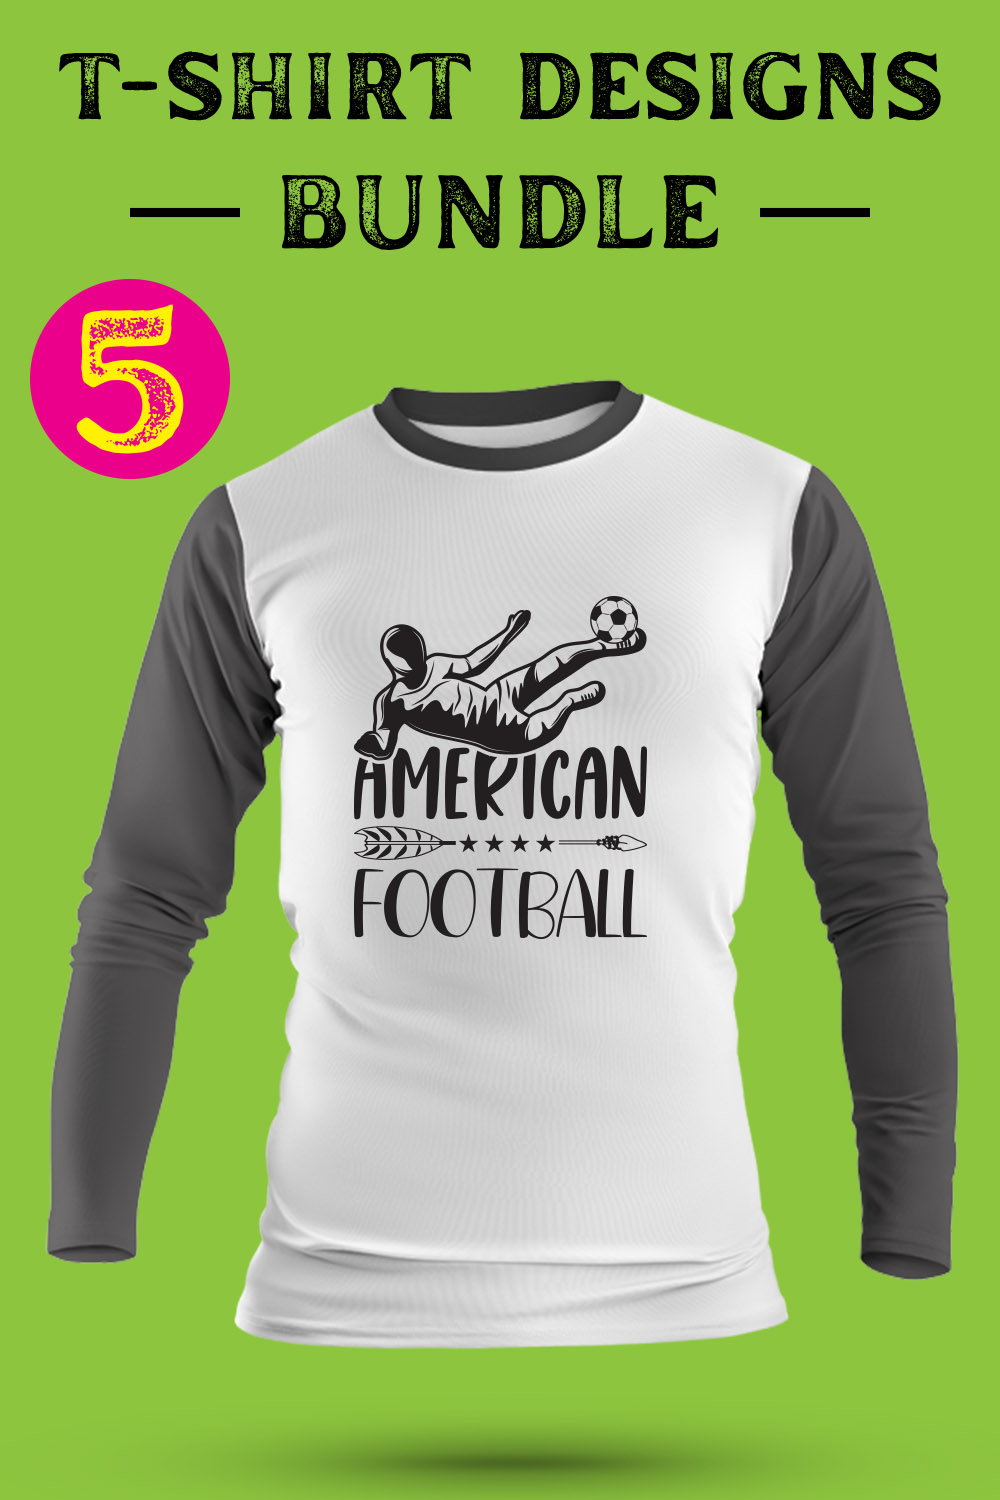 American Football Day T Shirt Designs Bundle voli-13 pinterest preview image.